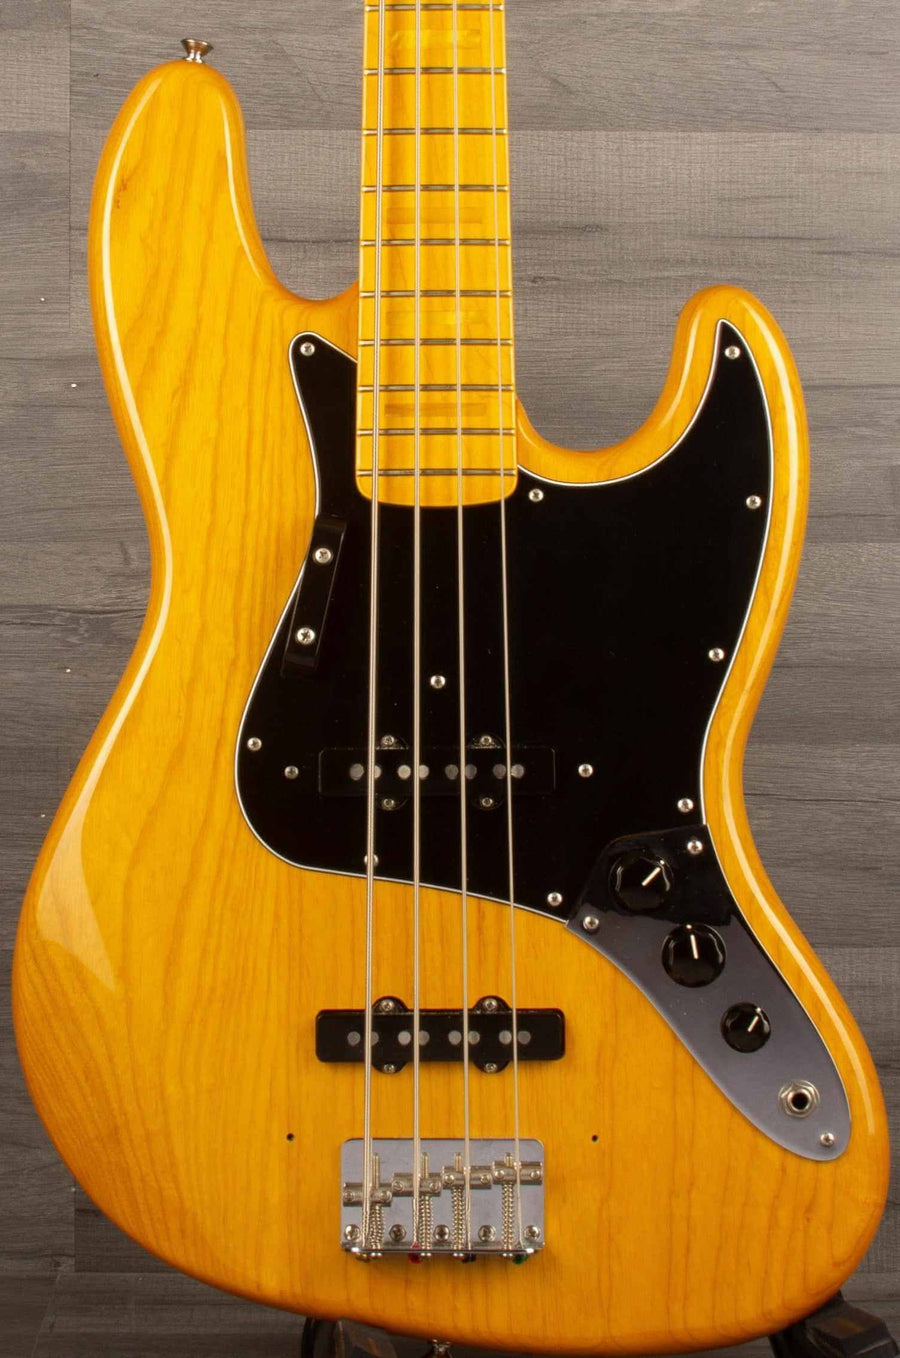 USED-  Fender American Vintage Series '75 Jazz bass - aged natural